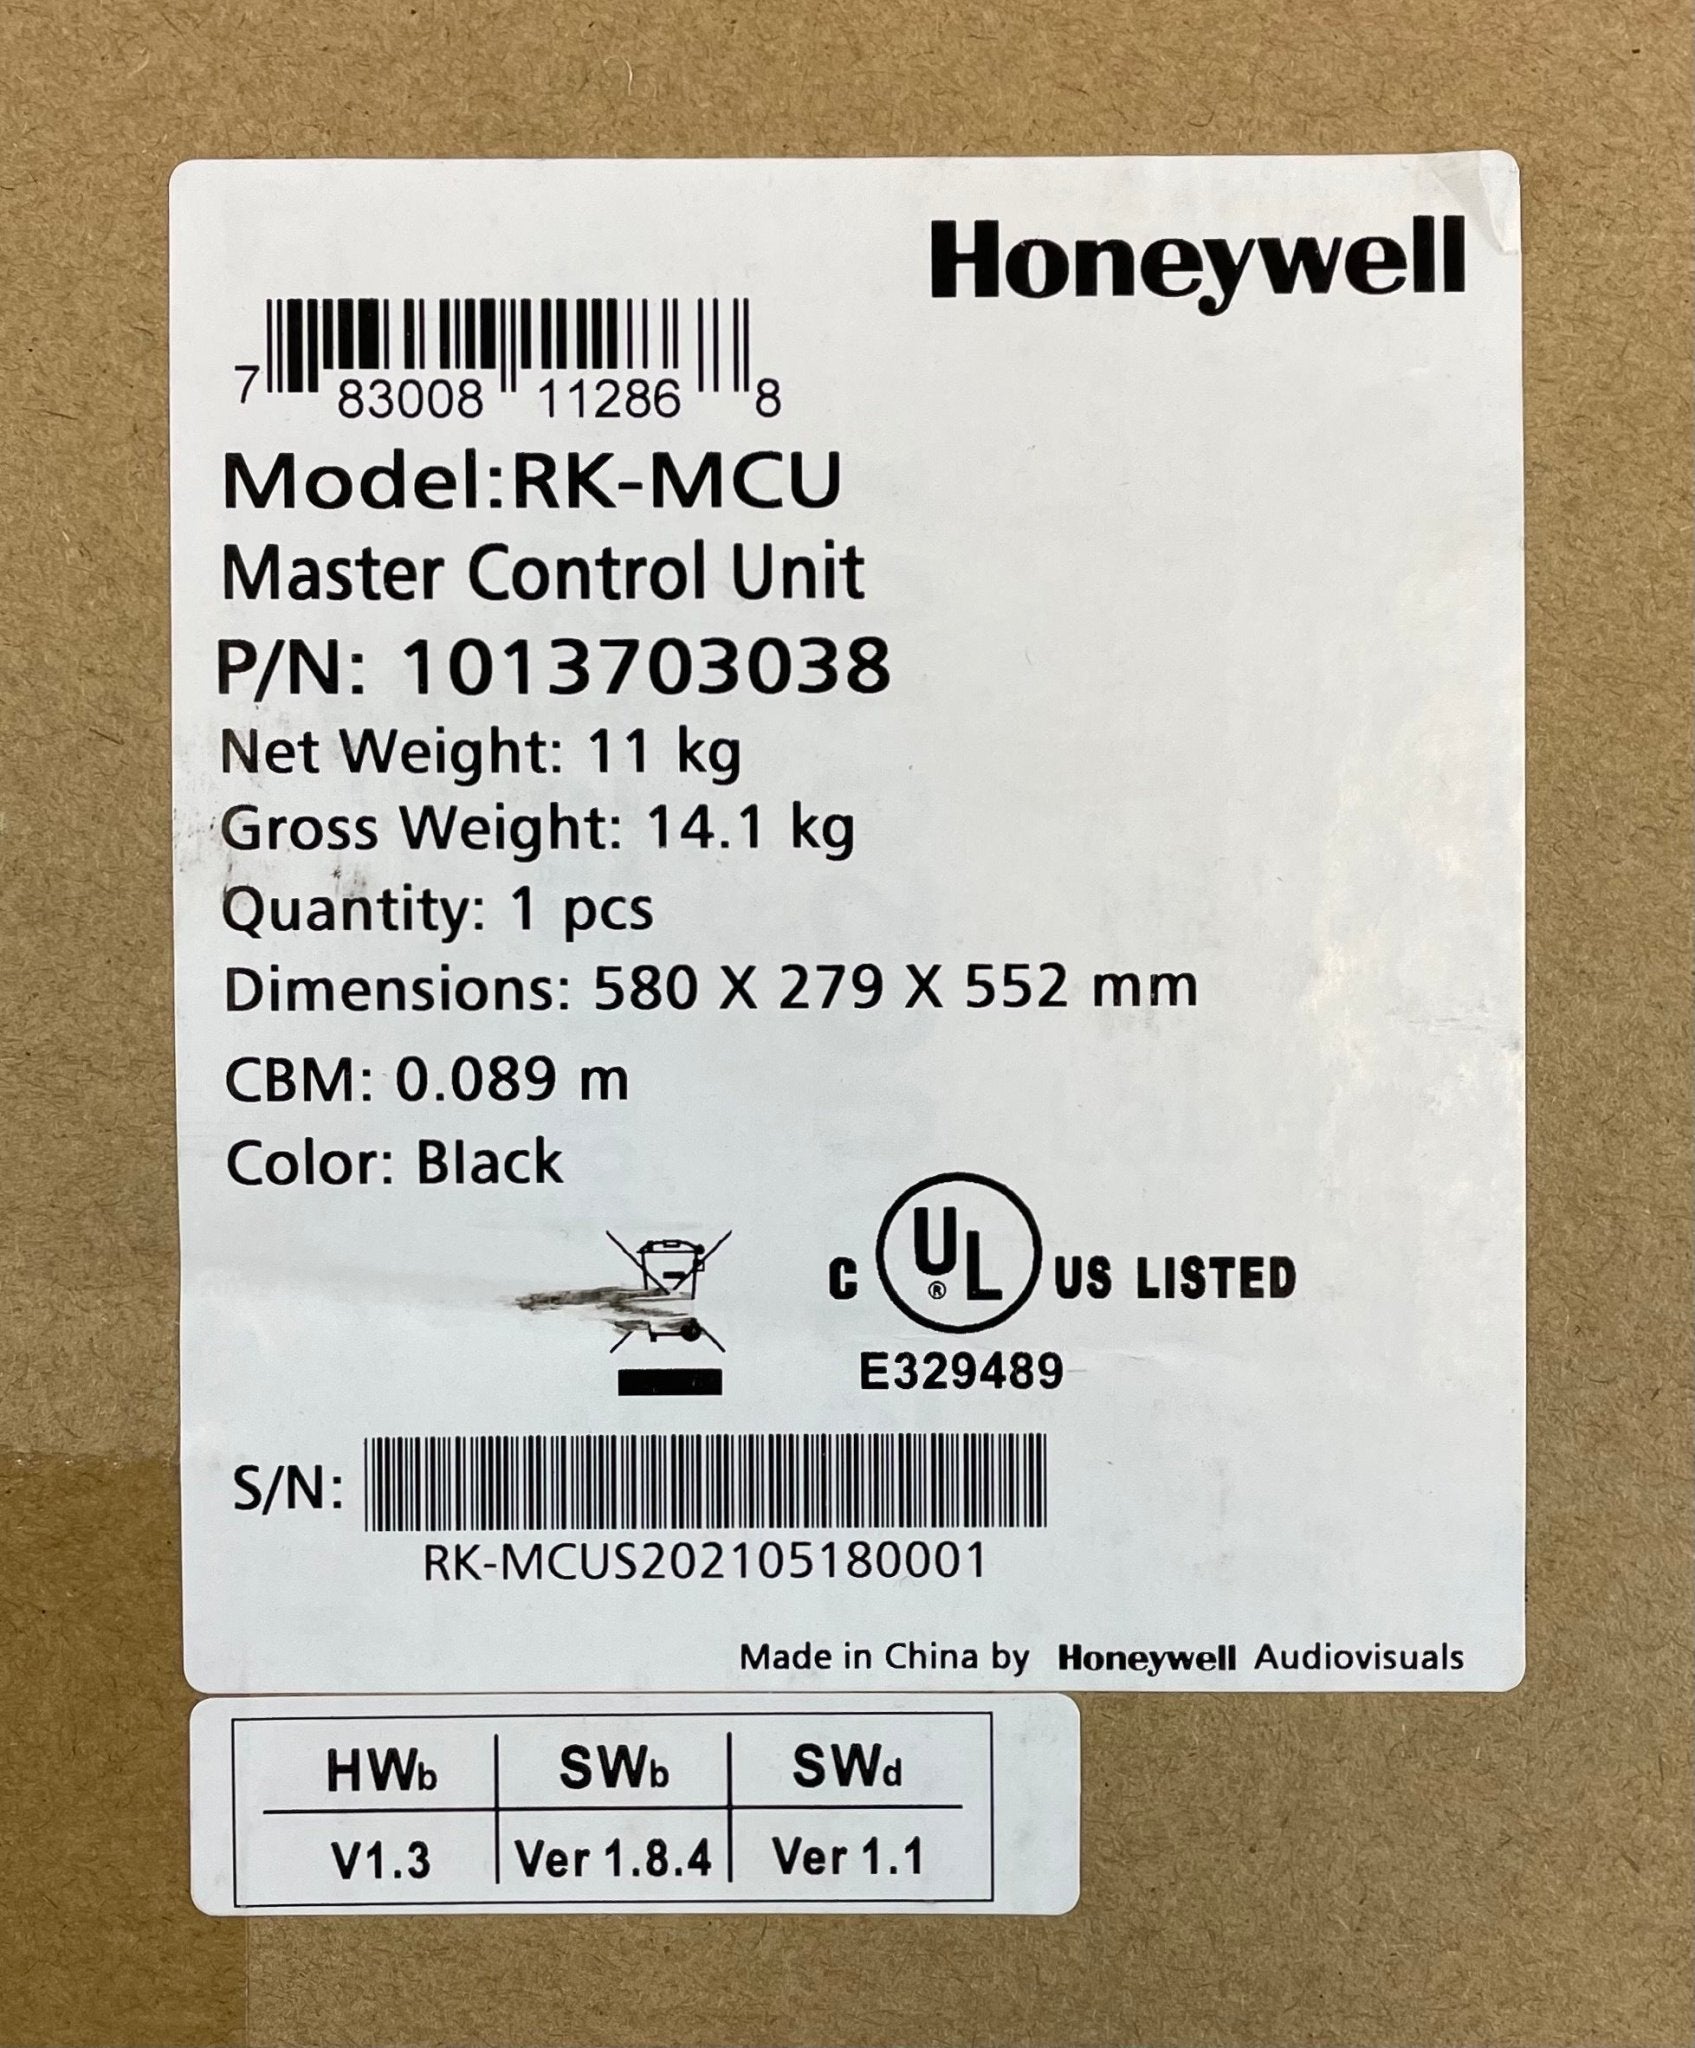 Honeywell RK-MCU - The Fire Alarm Supplier